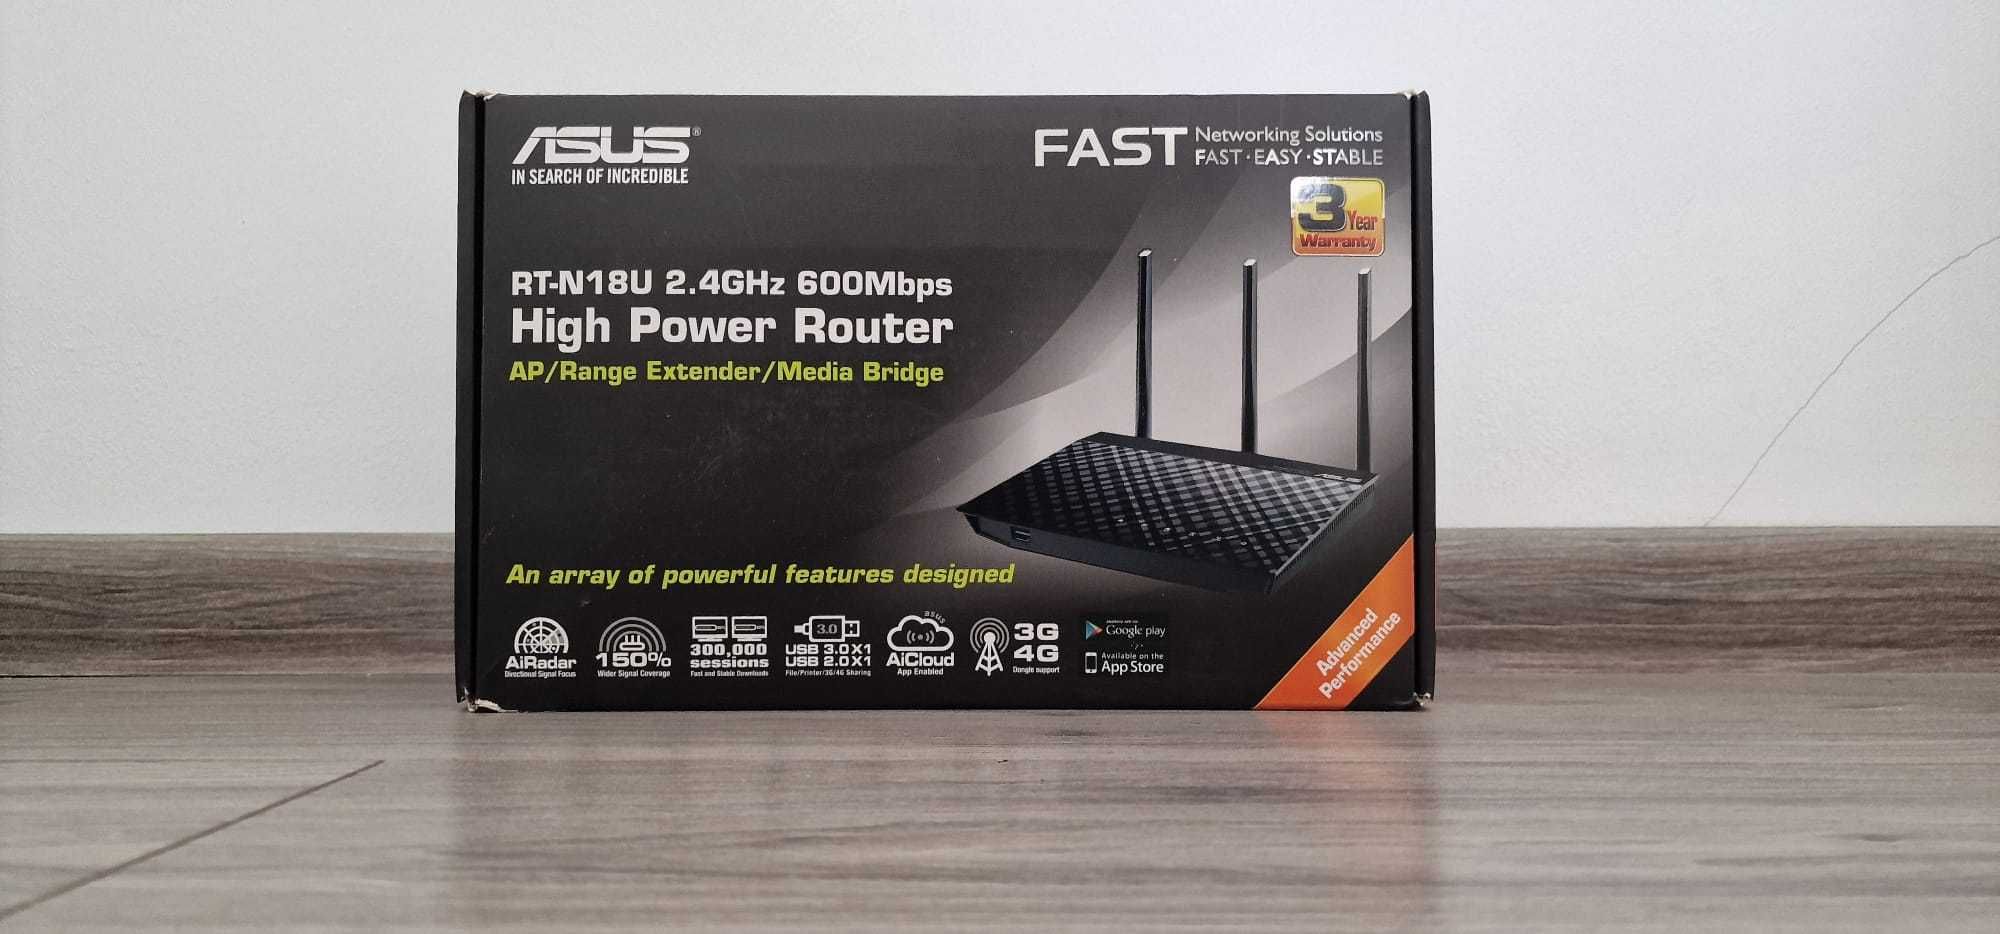 Asus RT-N18U 2.4GHz, 600Mbps, USB 3.0